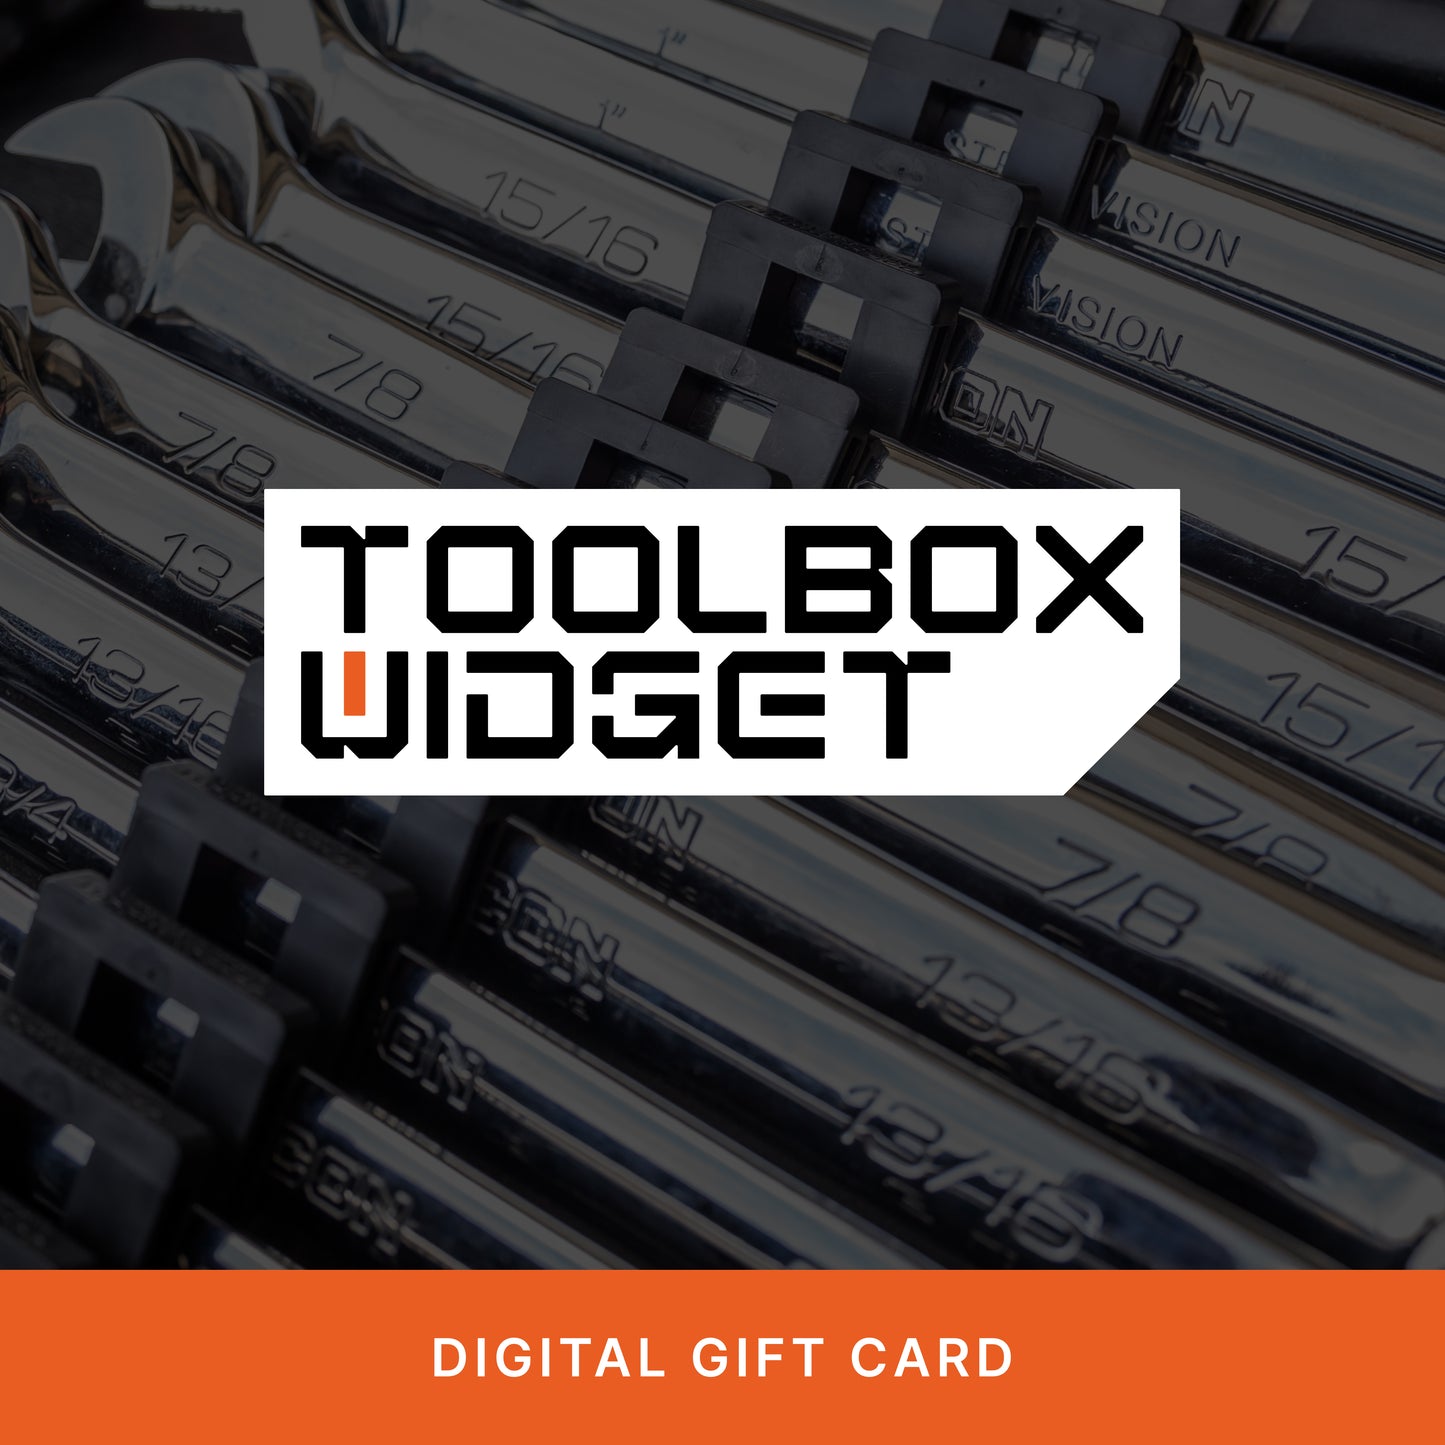 Digital Gift CardGraphic - ToolBox Widget AU